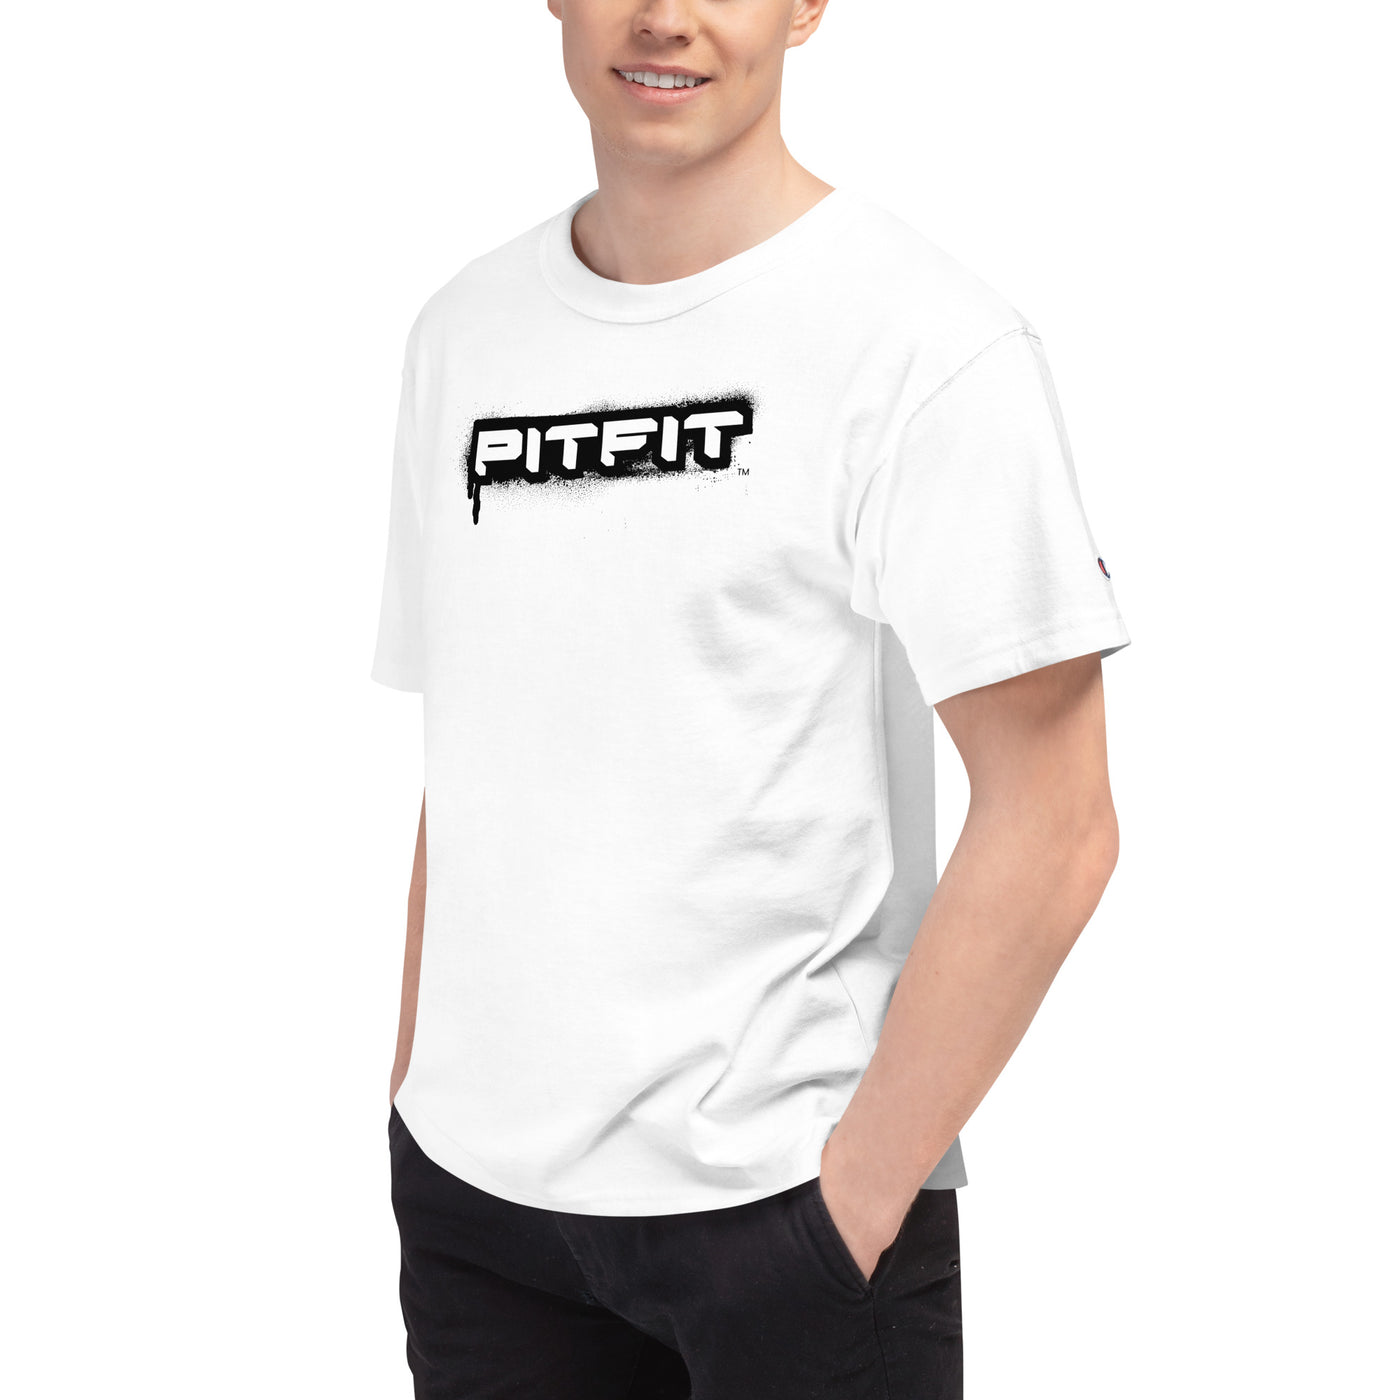 PITFIT White Champion T-Shirt